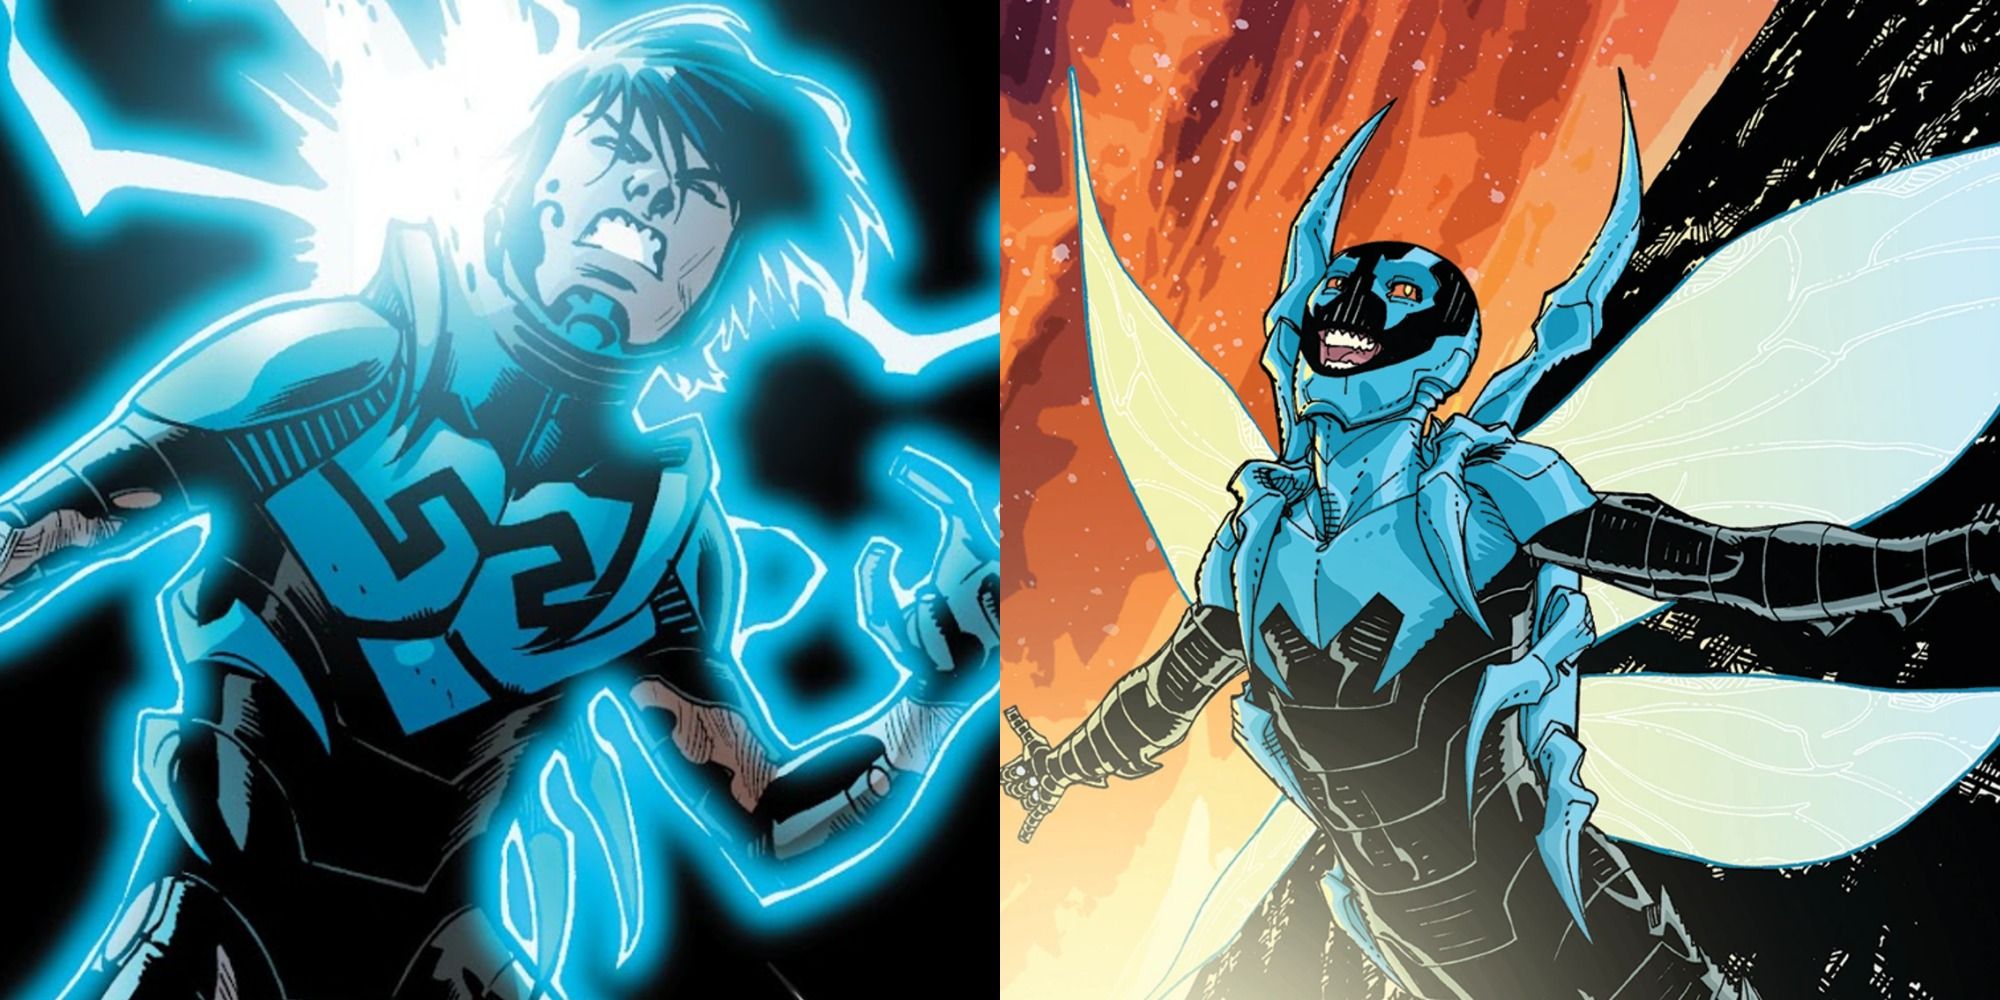 Split image of Jaime Reyes transforming into Blue Beetle and flying in space in Blue Beetle comics